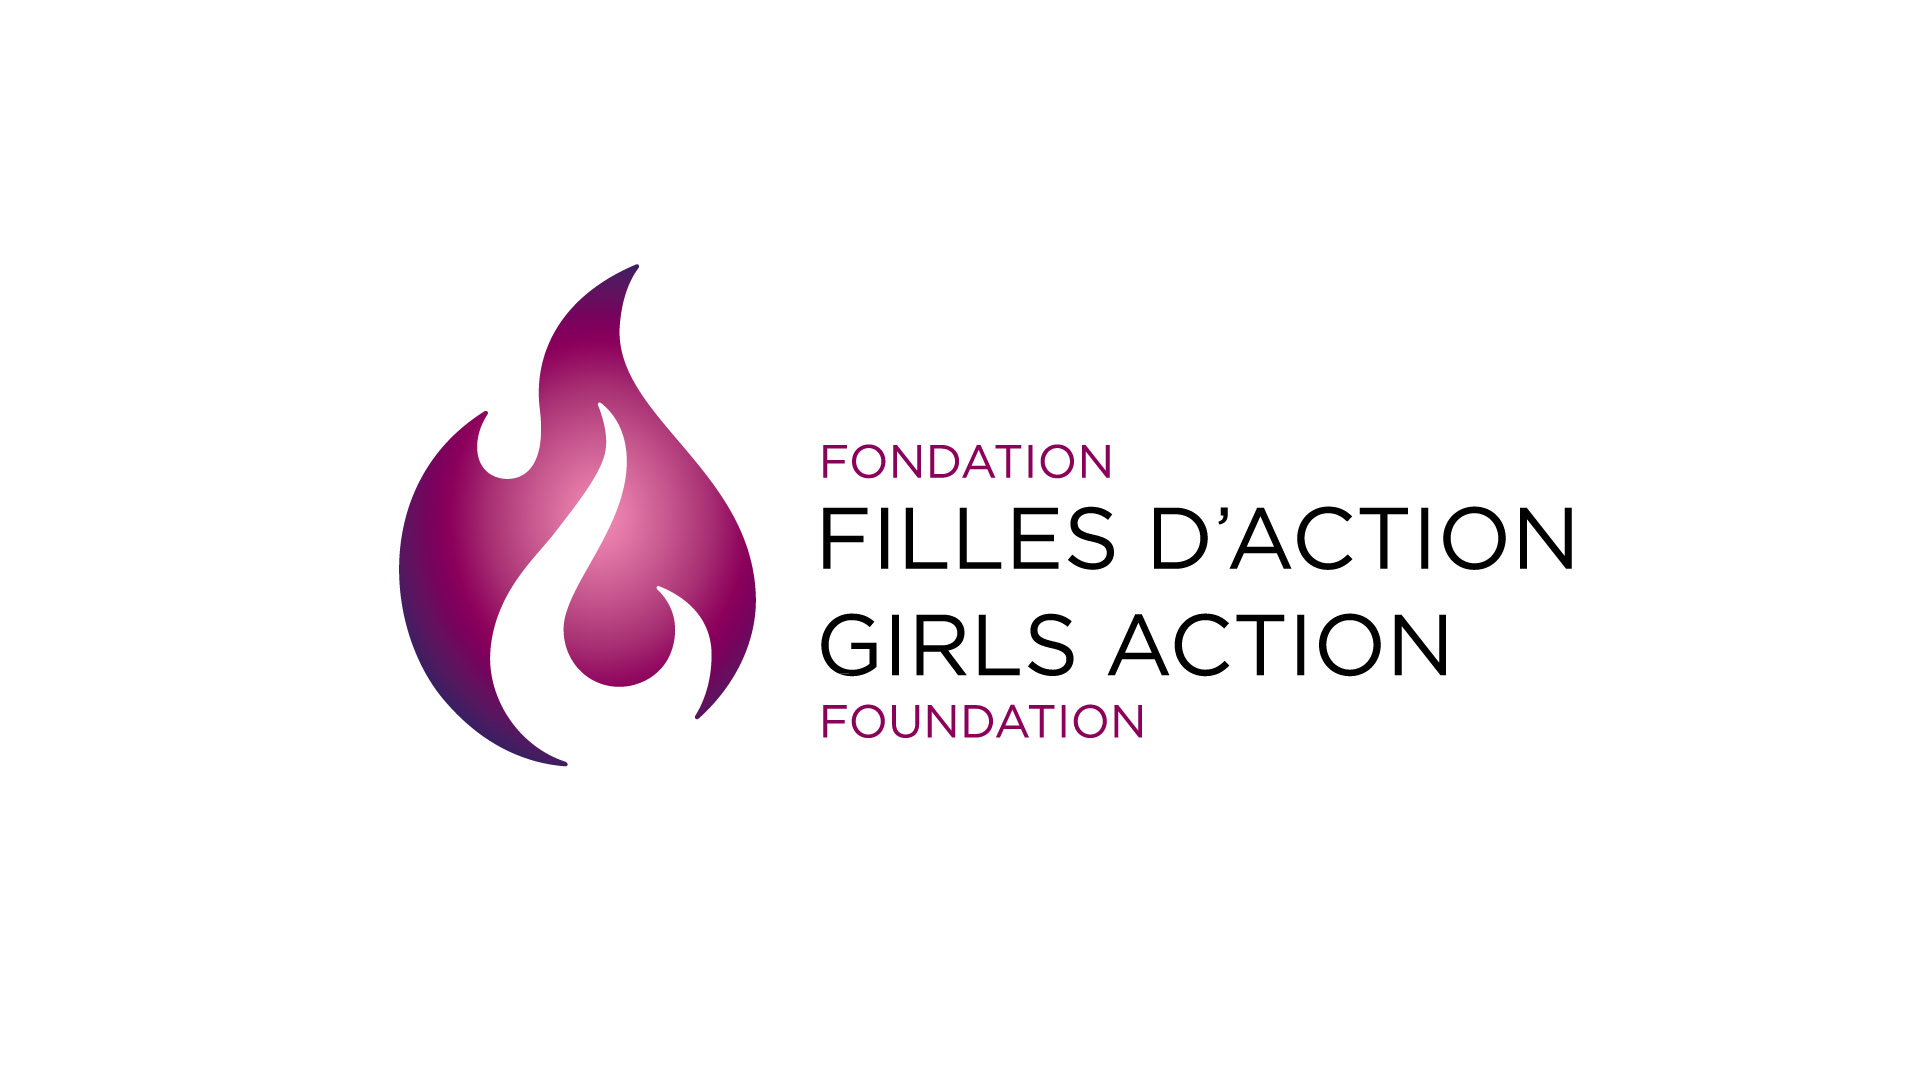 Fondation filles d'action logo